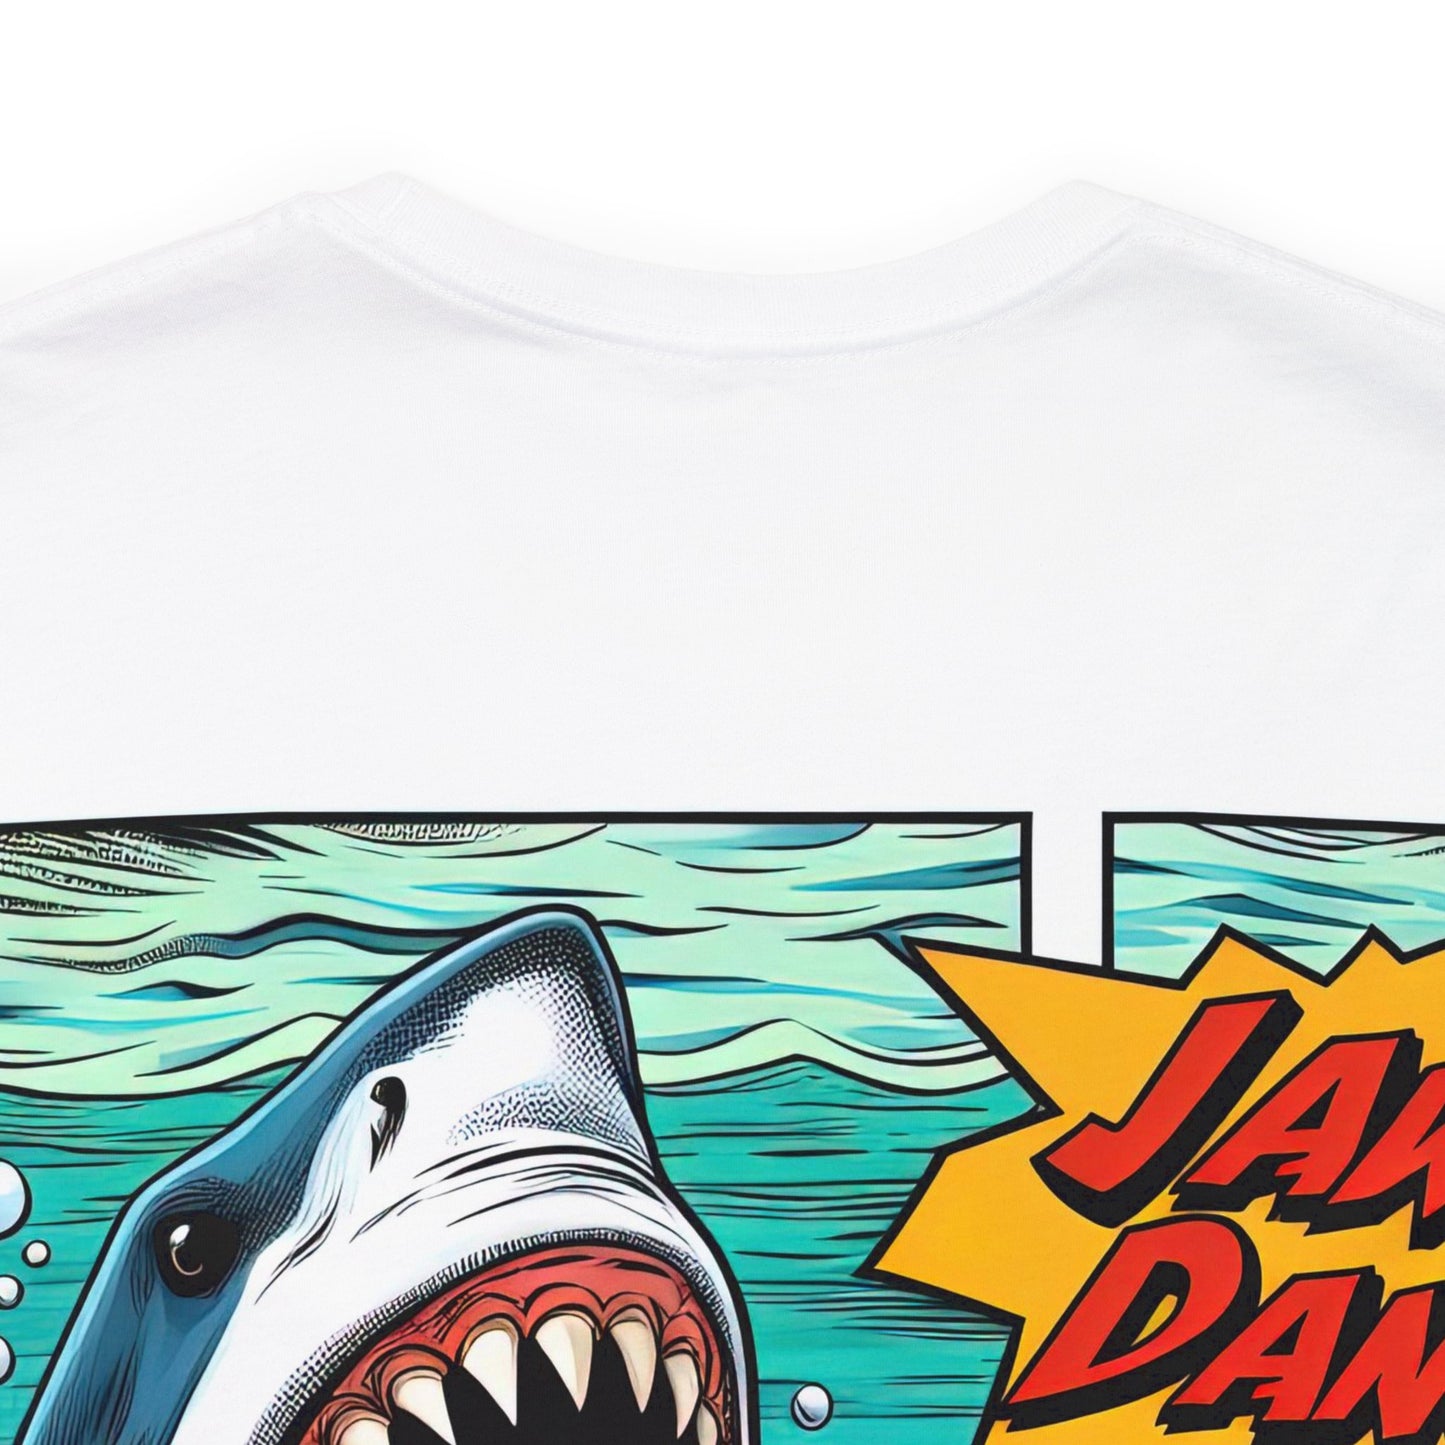 Unisex Jersey Short Sleeve Tee - Comics Shark